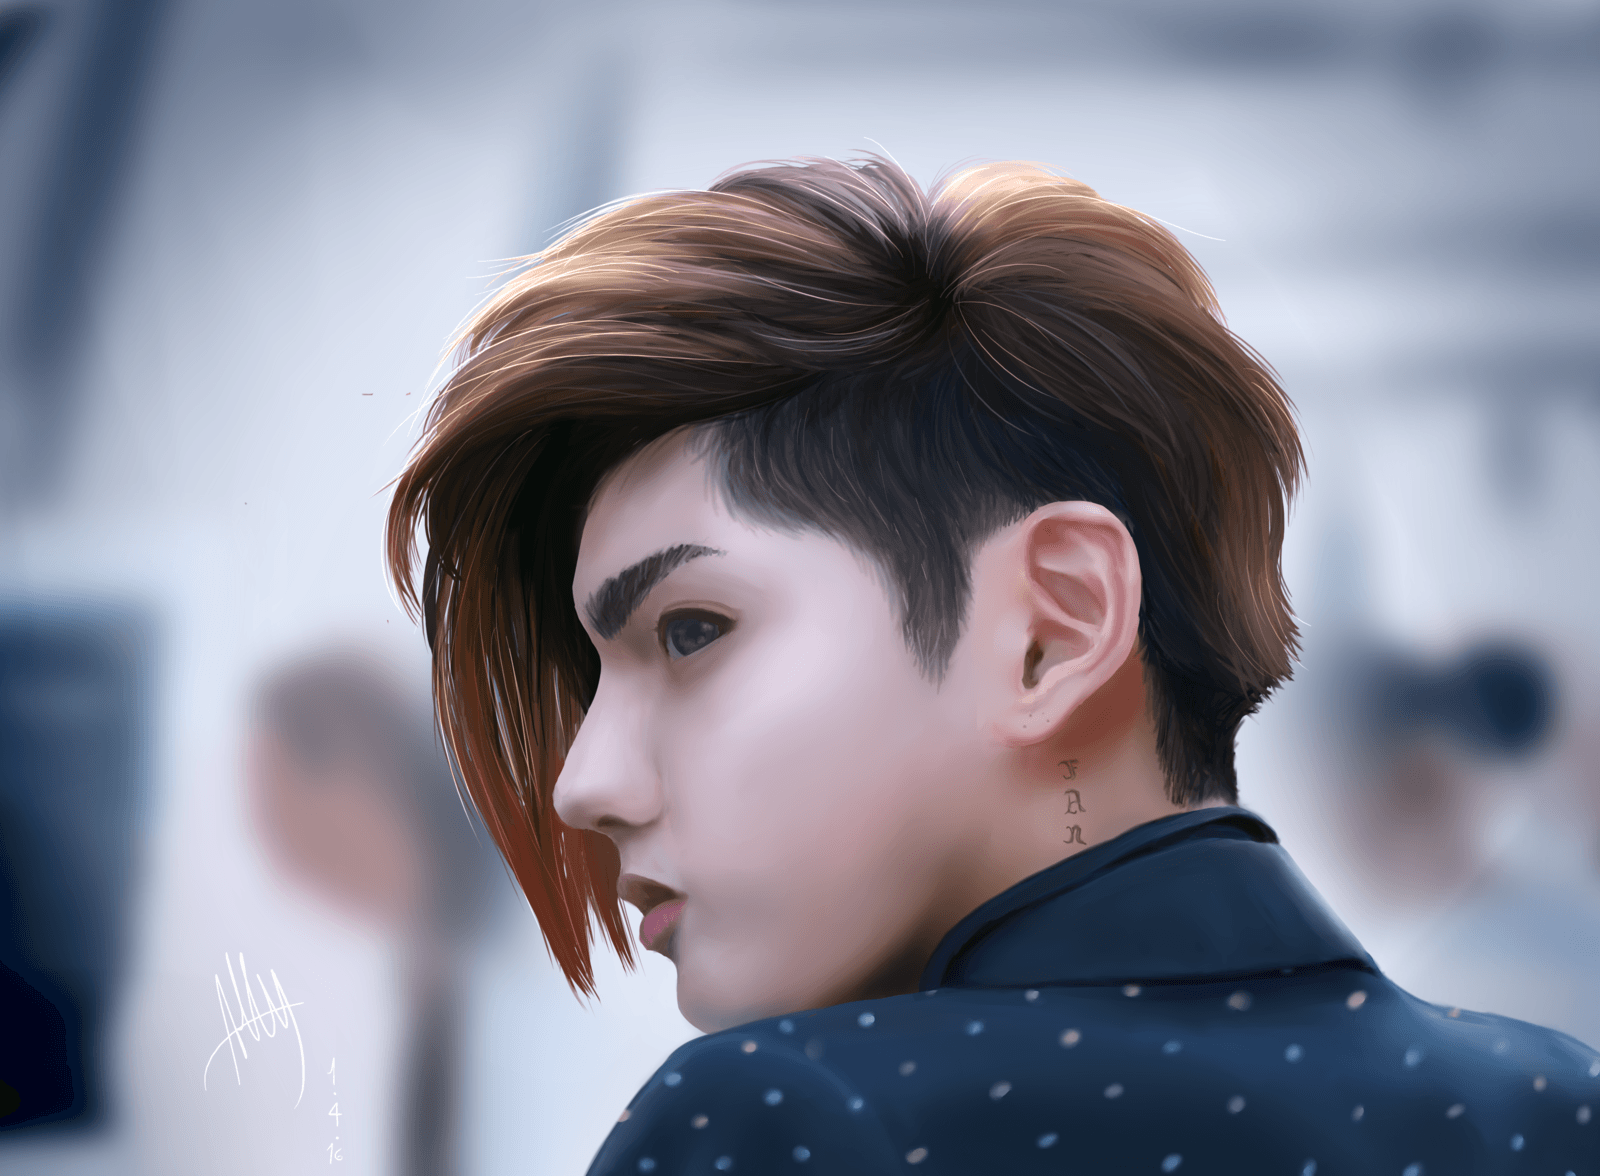 Handsome celebrity ‖ Kris Wu wallpaper - iMedia